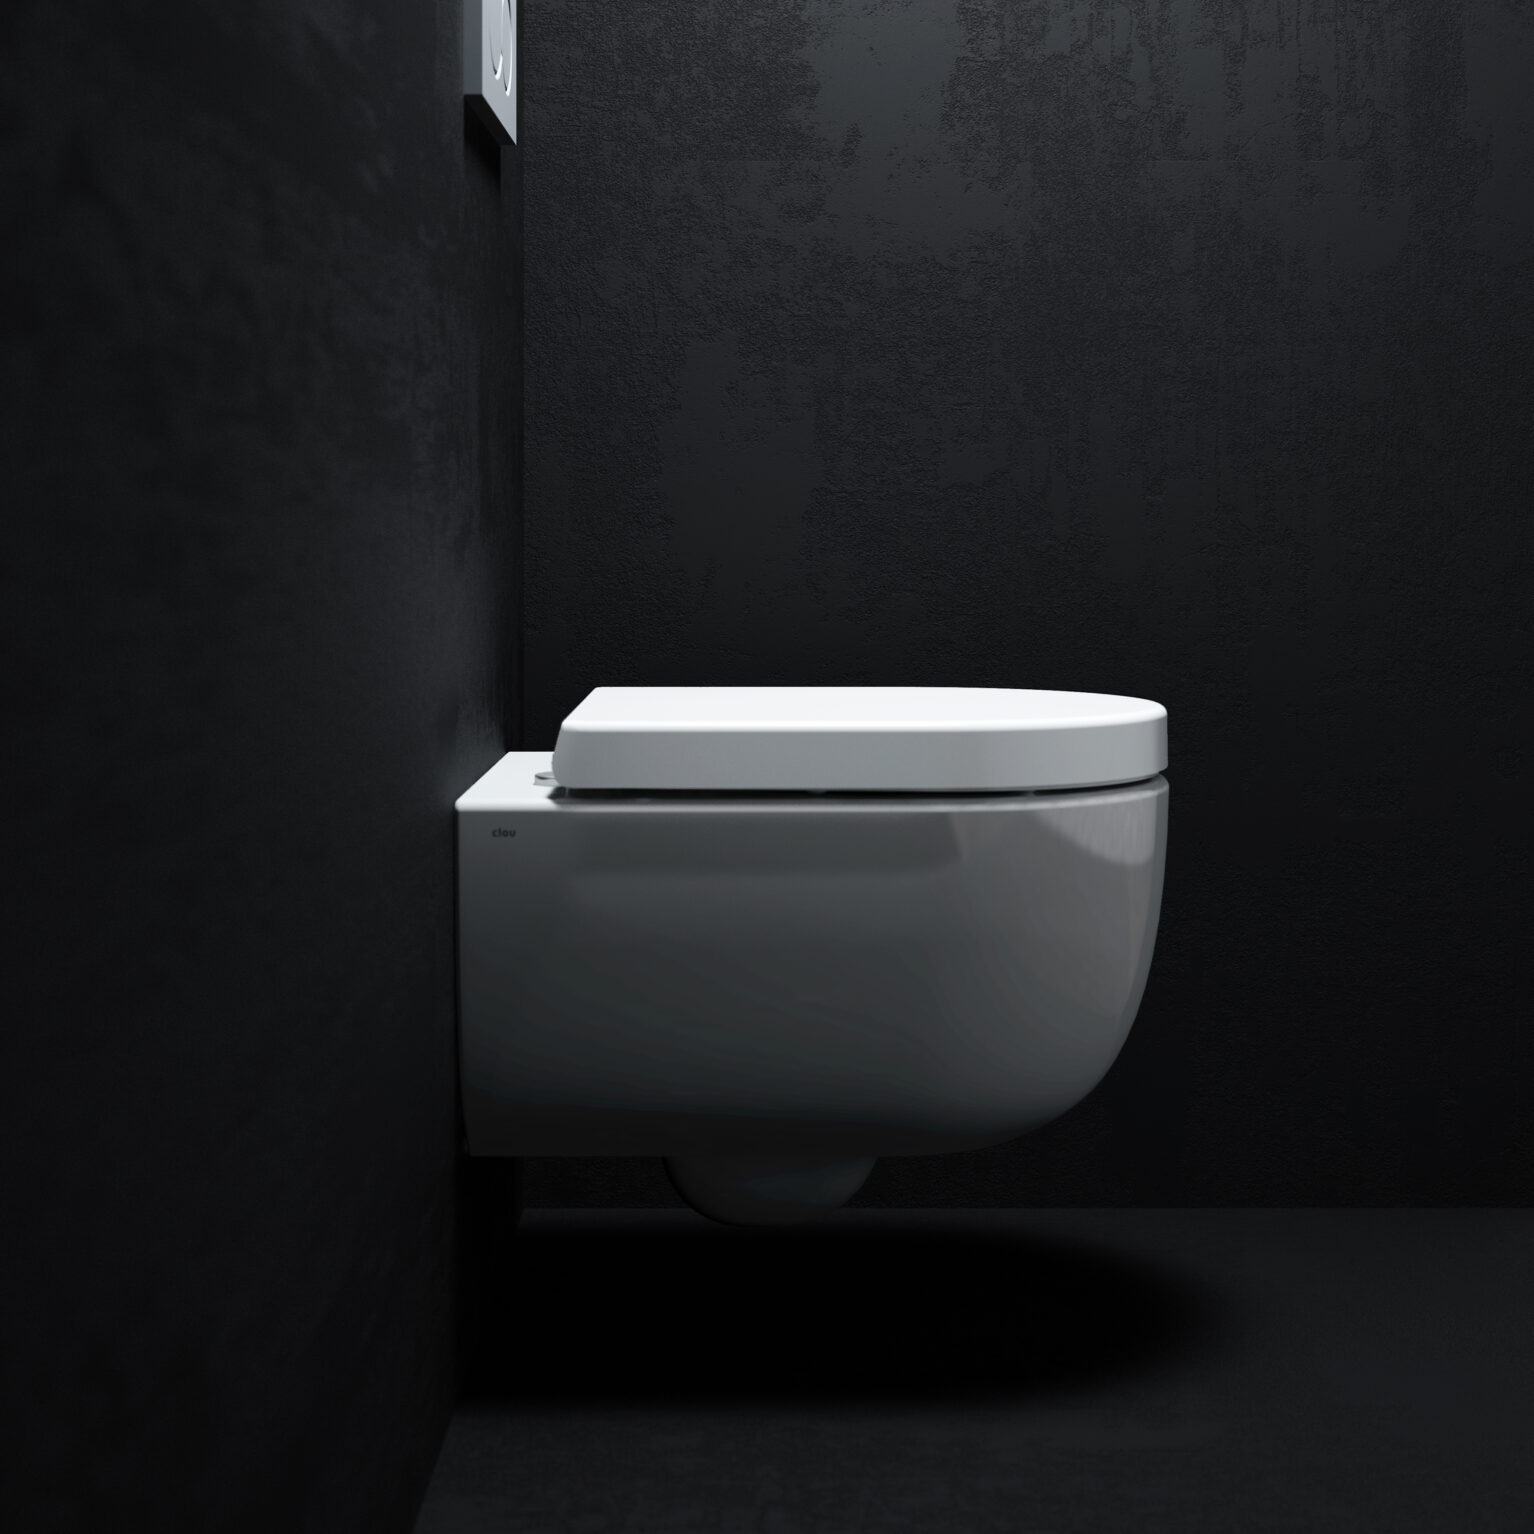 Toilet-wand-randloos-glanzend-wit-keramiek-badkamer-luxe-sanitair-Hammock-clou-CL040108001-CL0401080-49-cm-bevestiging-inbegrepen-dunne-zitting-deksel-soft-close-quick-release-one-pack